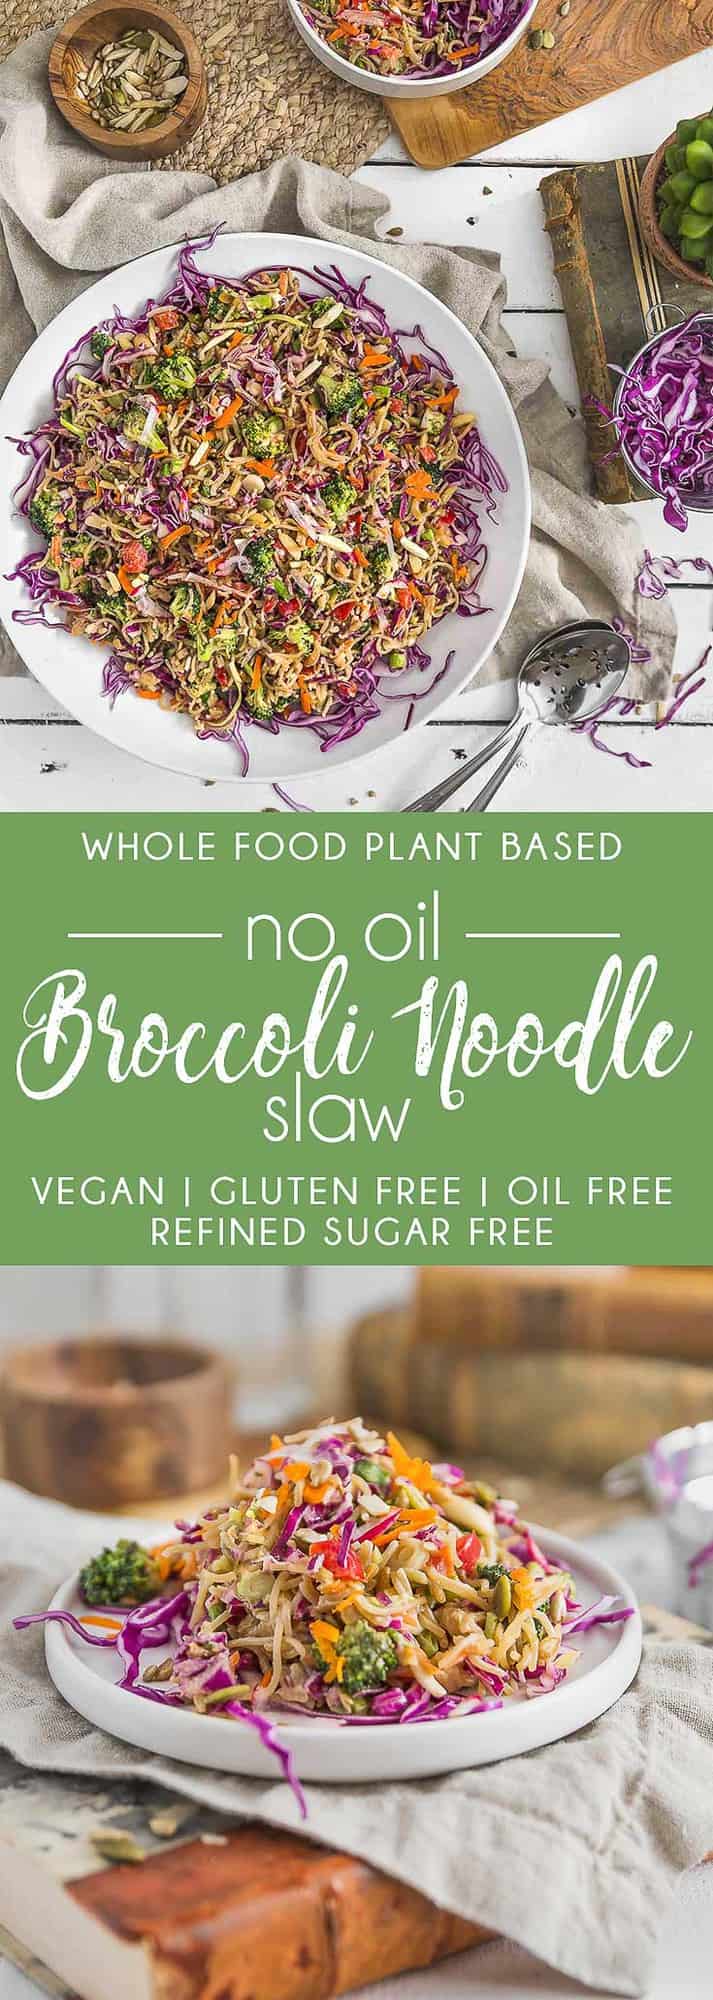 No Oil Broccoli Noodle Slaw, vegan salad, vegan slaw, vegan dinner, broccoli slaw, noodles, vegan noodles, plant based, vegan, vegetarian, whole food plant based, gluten free, recipe, wfpb, healthy, healthy vegan, oil free, no refined sugar, no oil, refined sugar free, dairy free, vegan dressing, vegan lunch, salad, dinner, lunch, easy recipe, dressing, broccoli, summer, picnic, party, entertaining